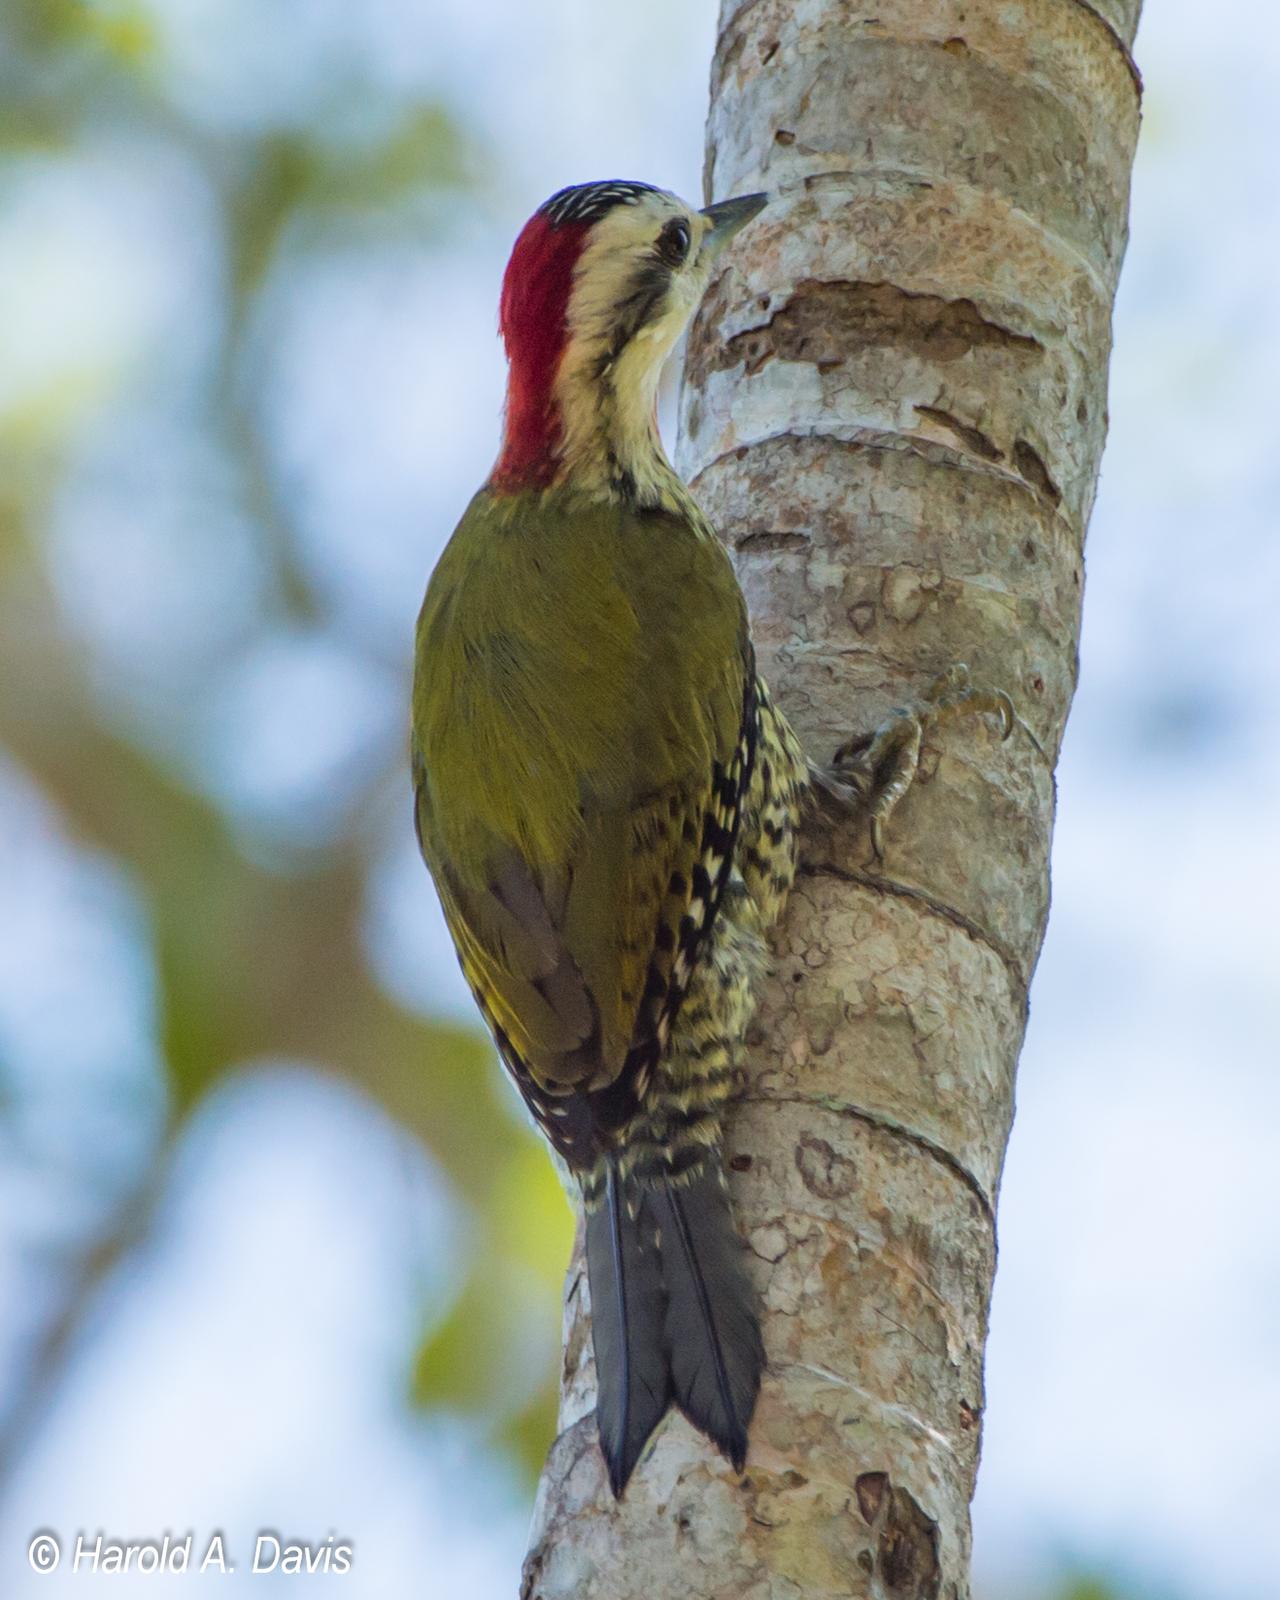 Cuban Green Woodpecker Photo by Harold Davis